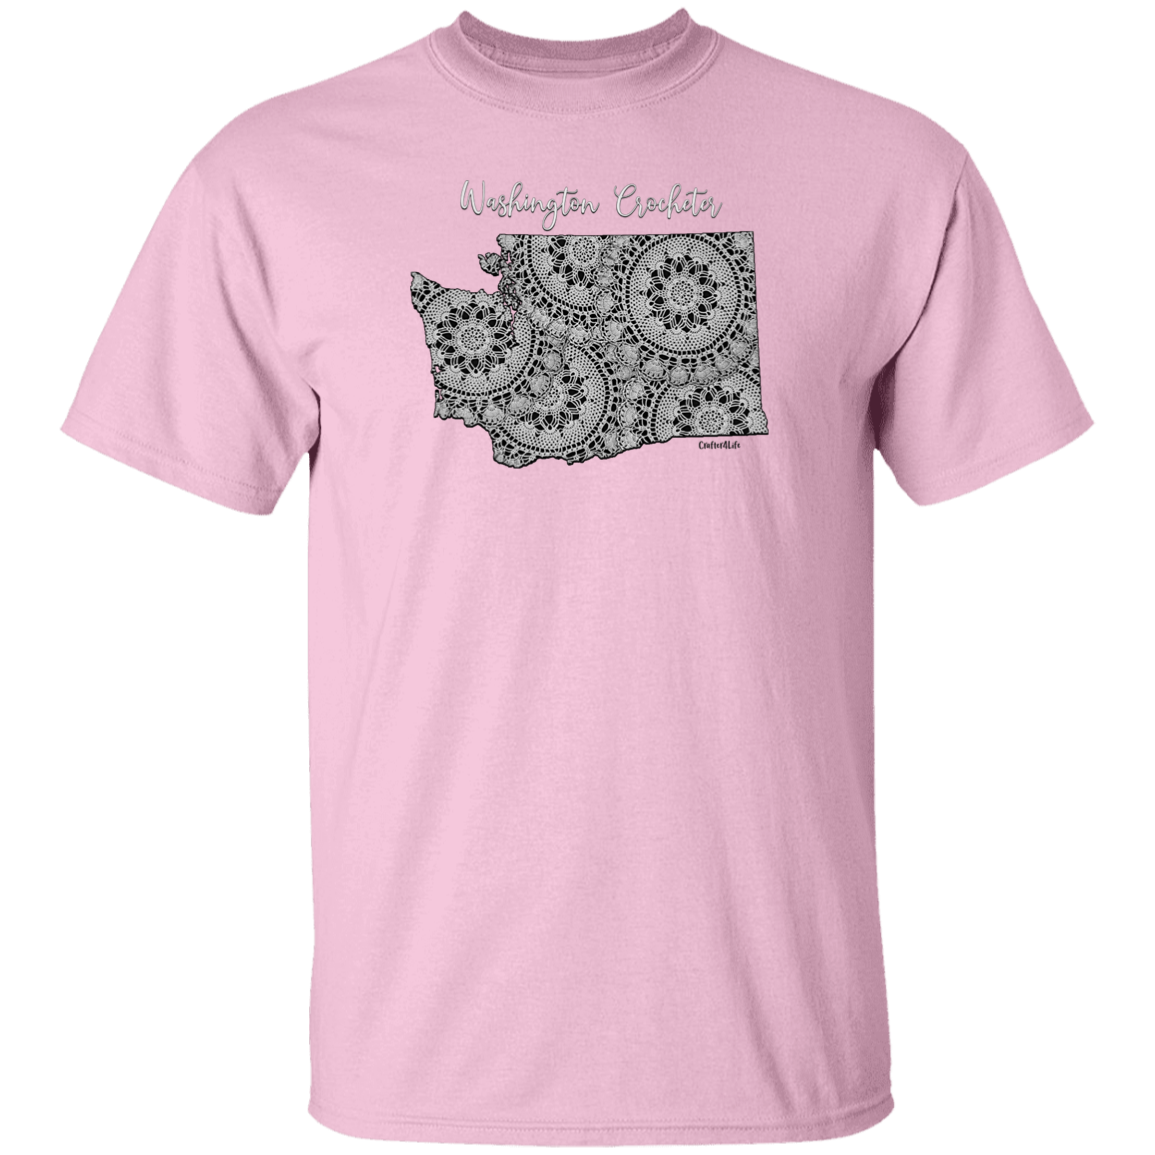 Washington Crocheter T-Shirt